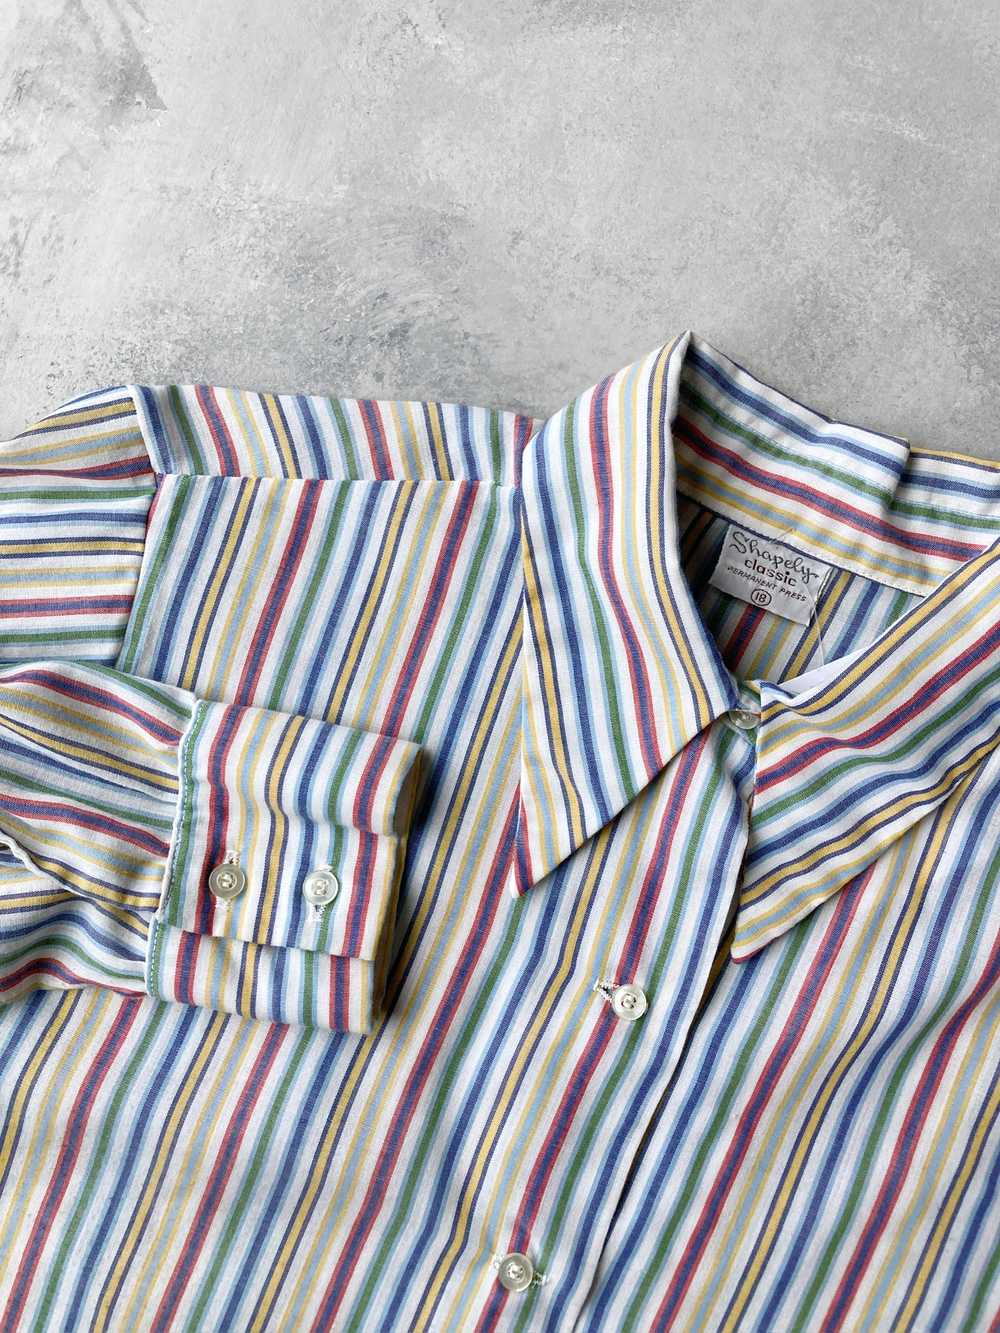 Colorful Striped Shirt 70's - Medium / Large - image 2